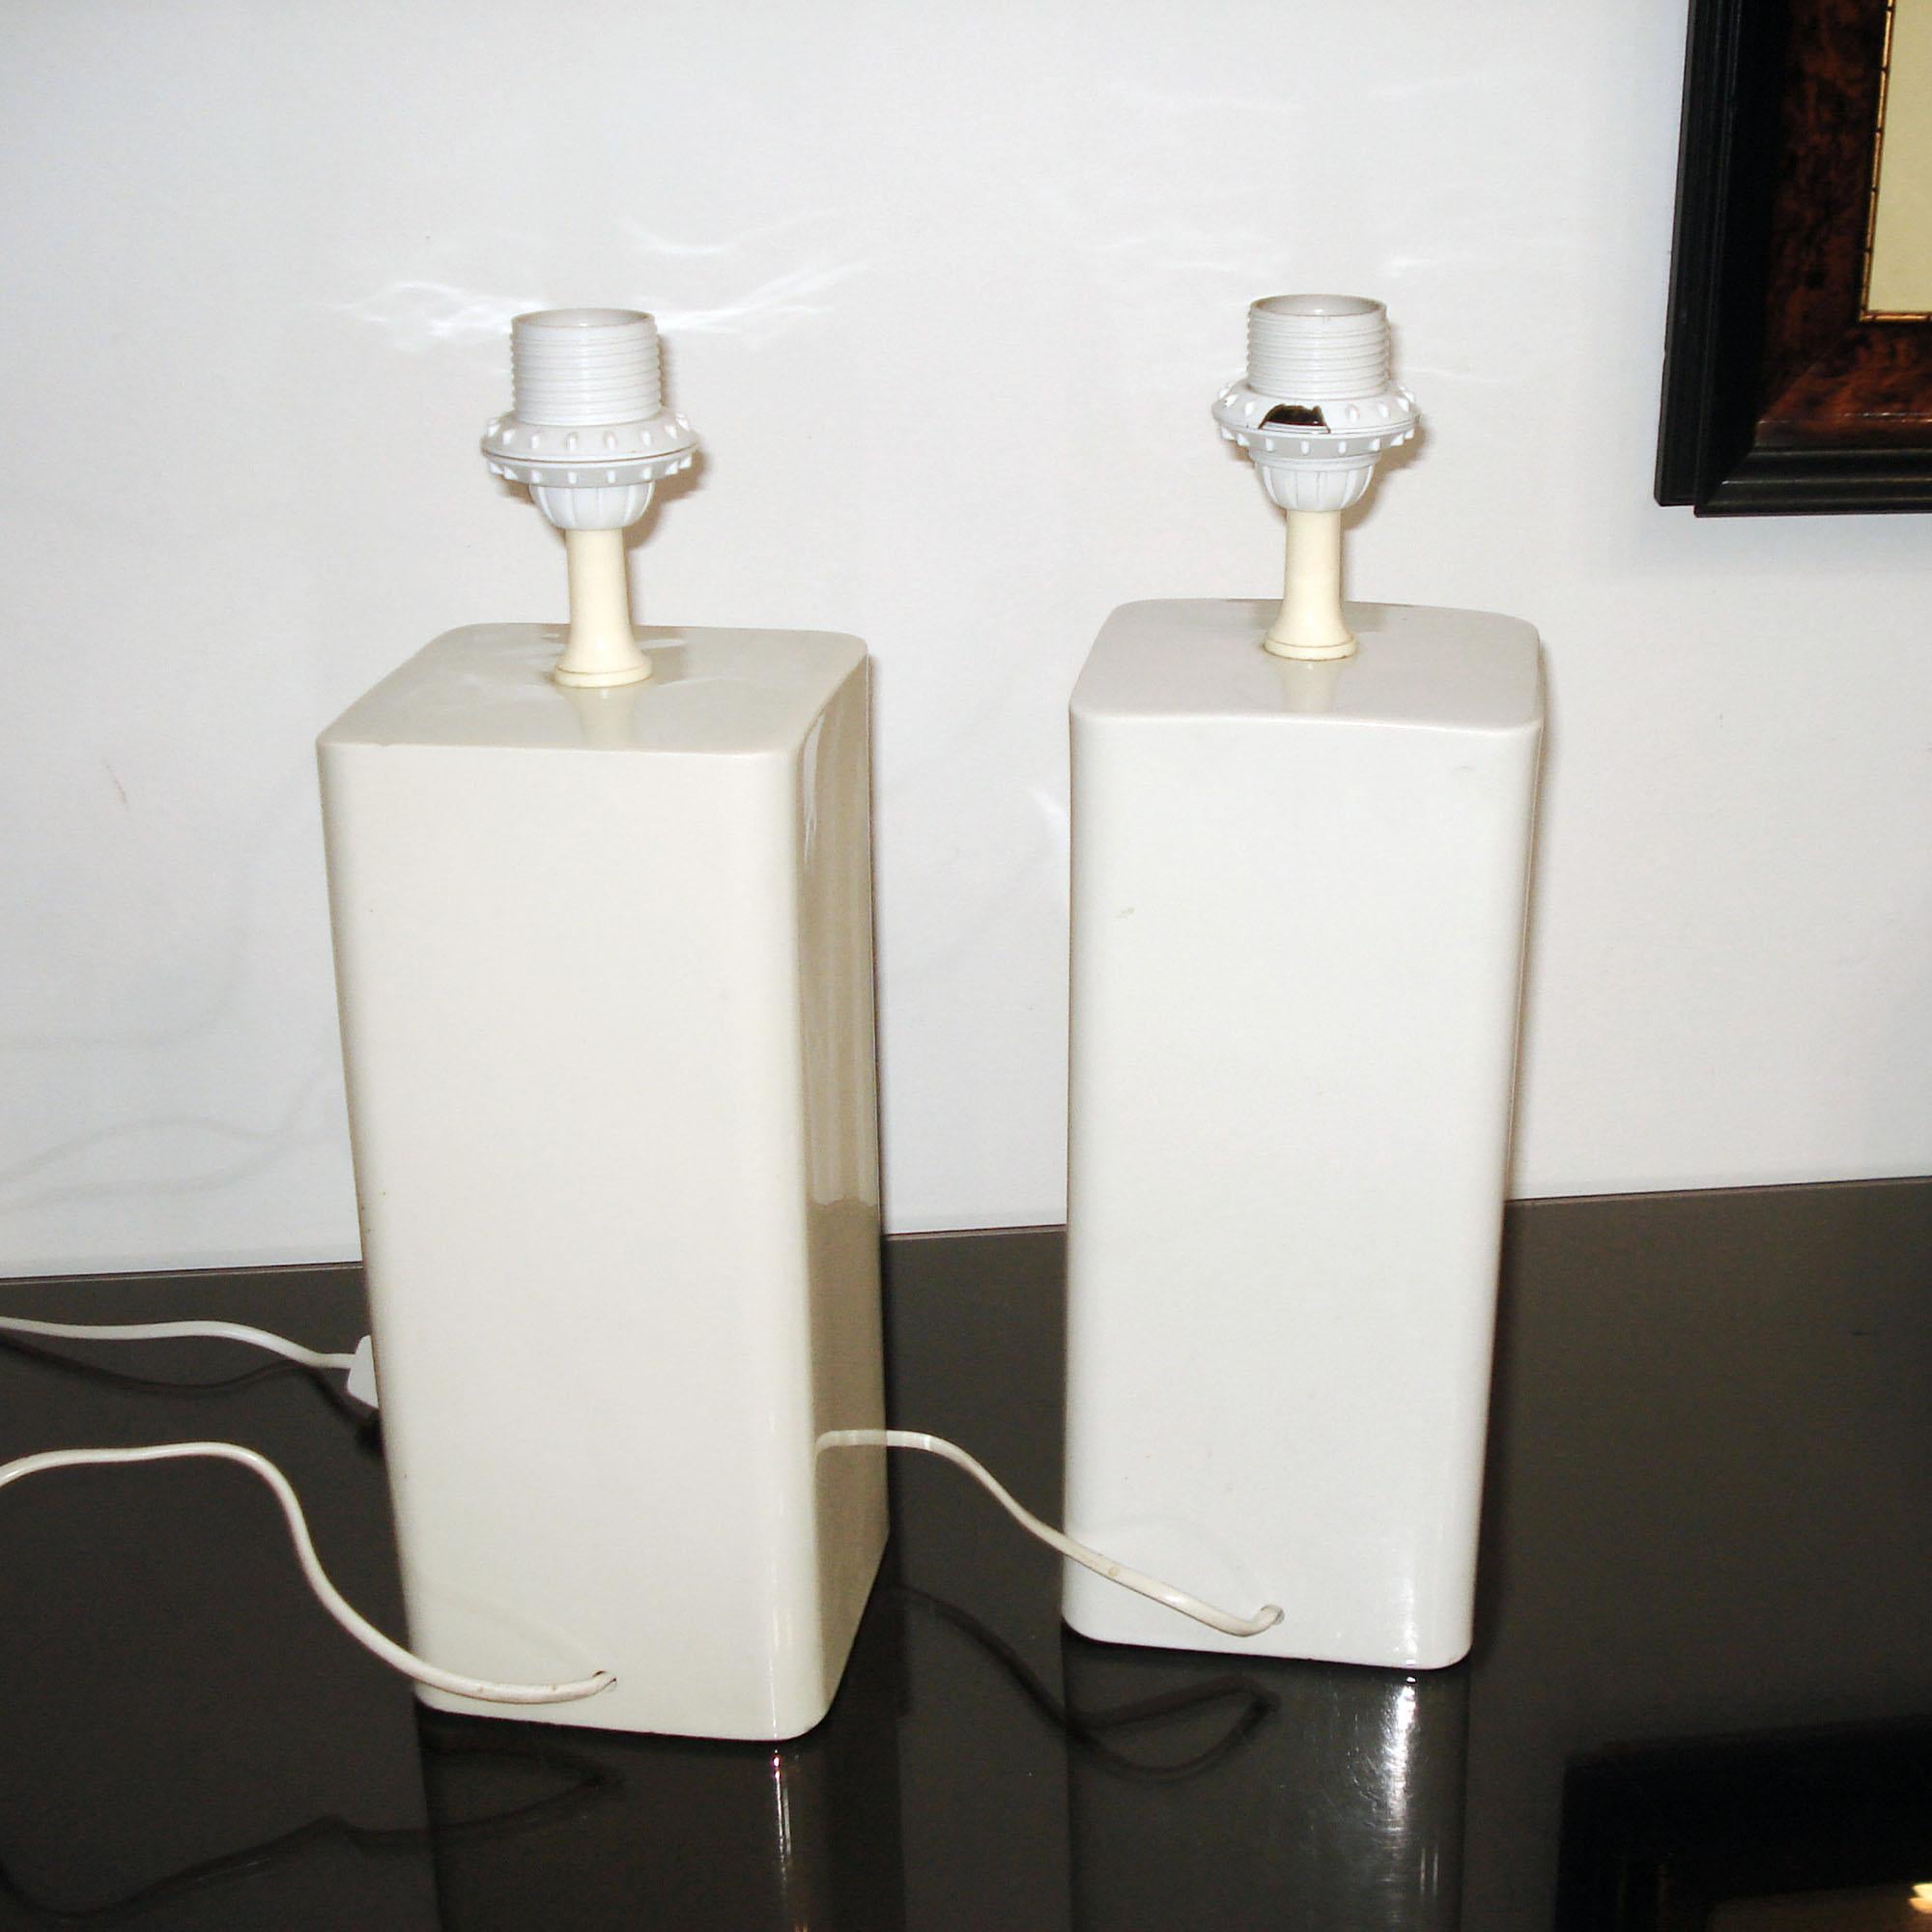 Porcelain Pair of Ceramic Table Lamps Bamboo Decor by Nordiska Kompaniet, Sweden 1960s For Sale